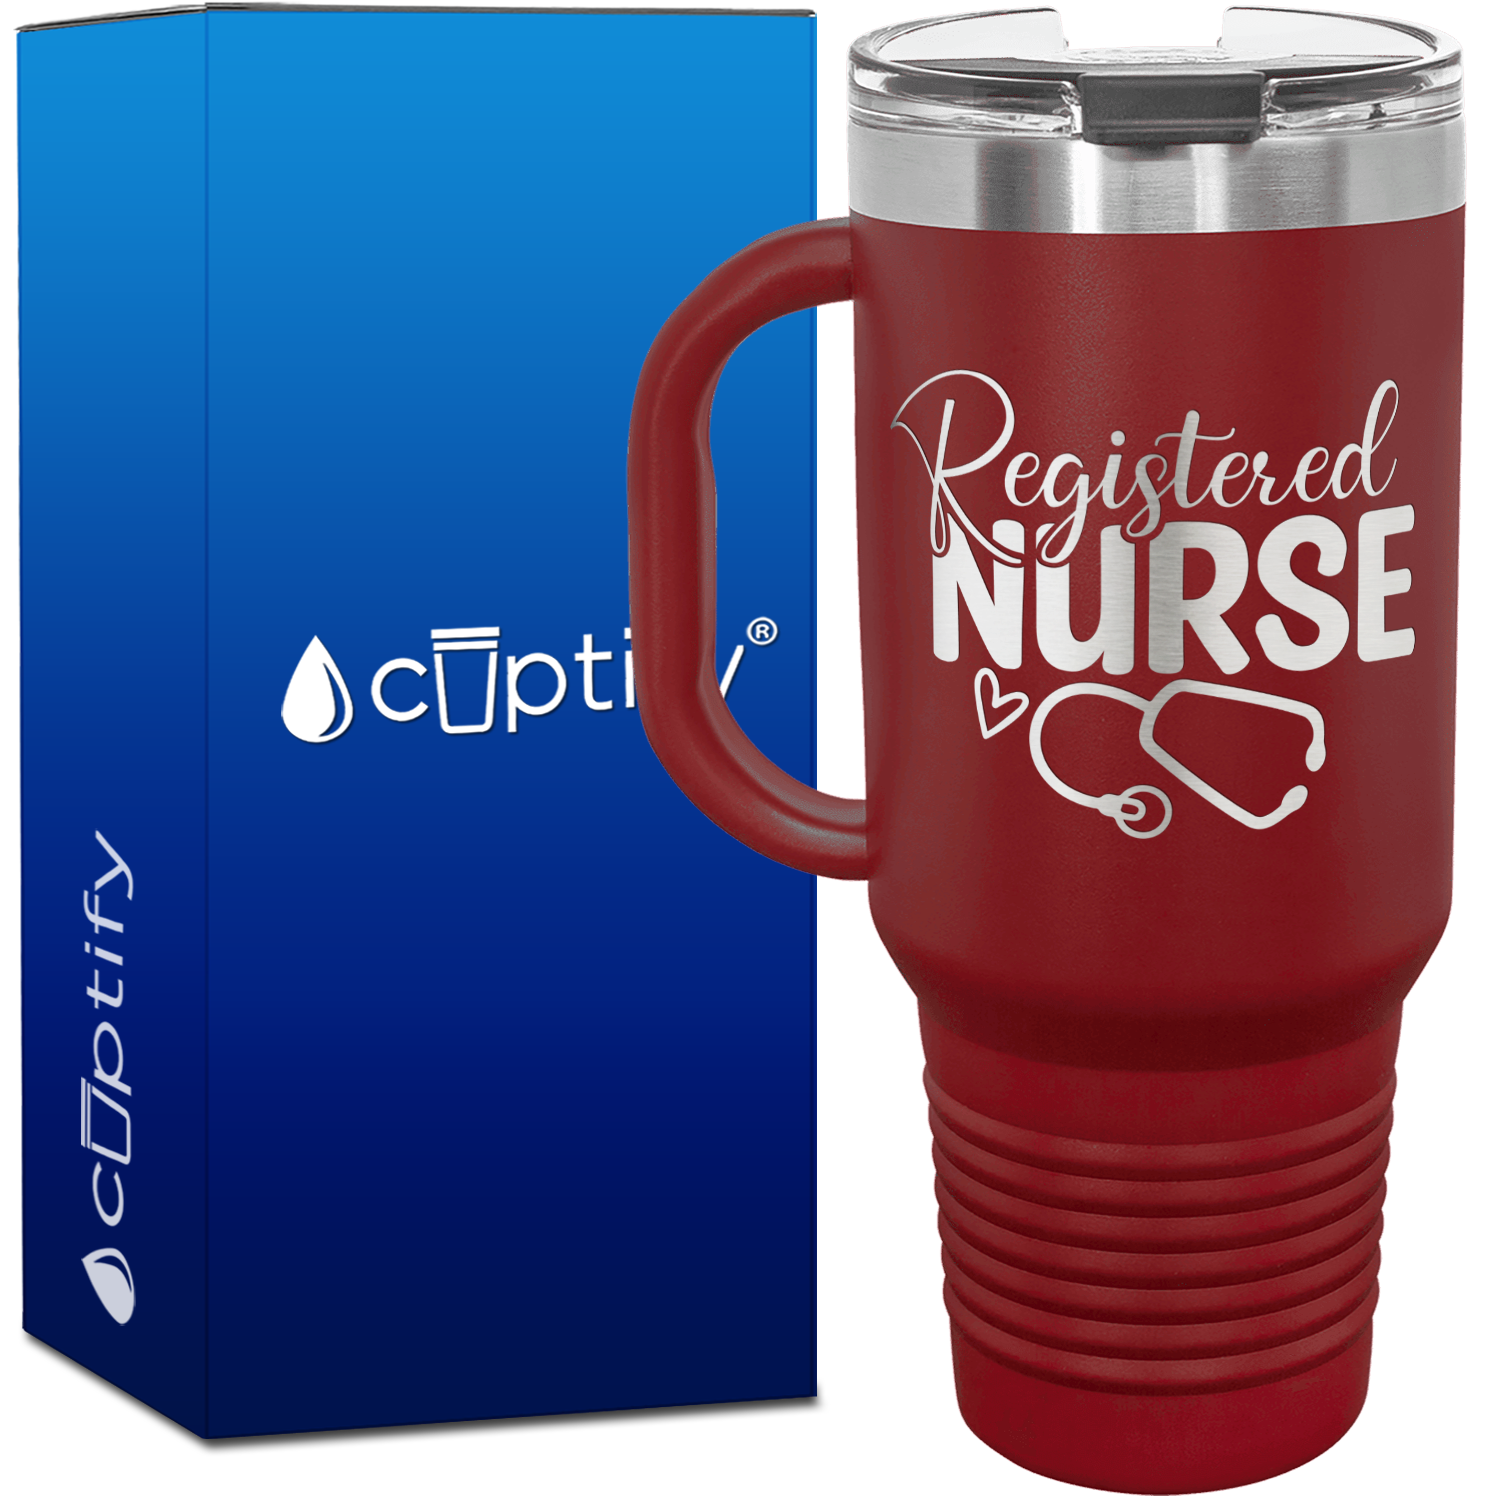 Registered Nurse Stethoscope 40oz Nurse Travel Mug